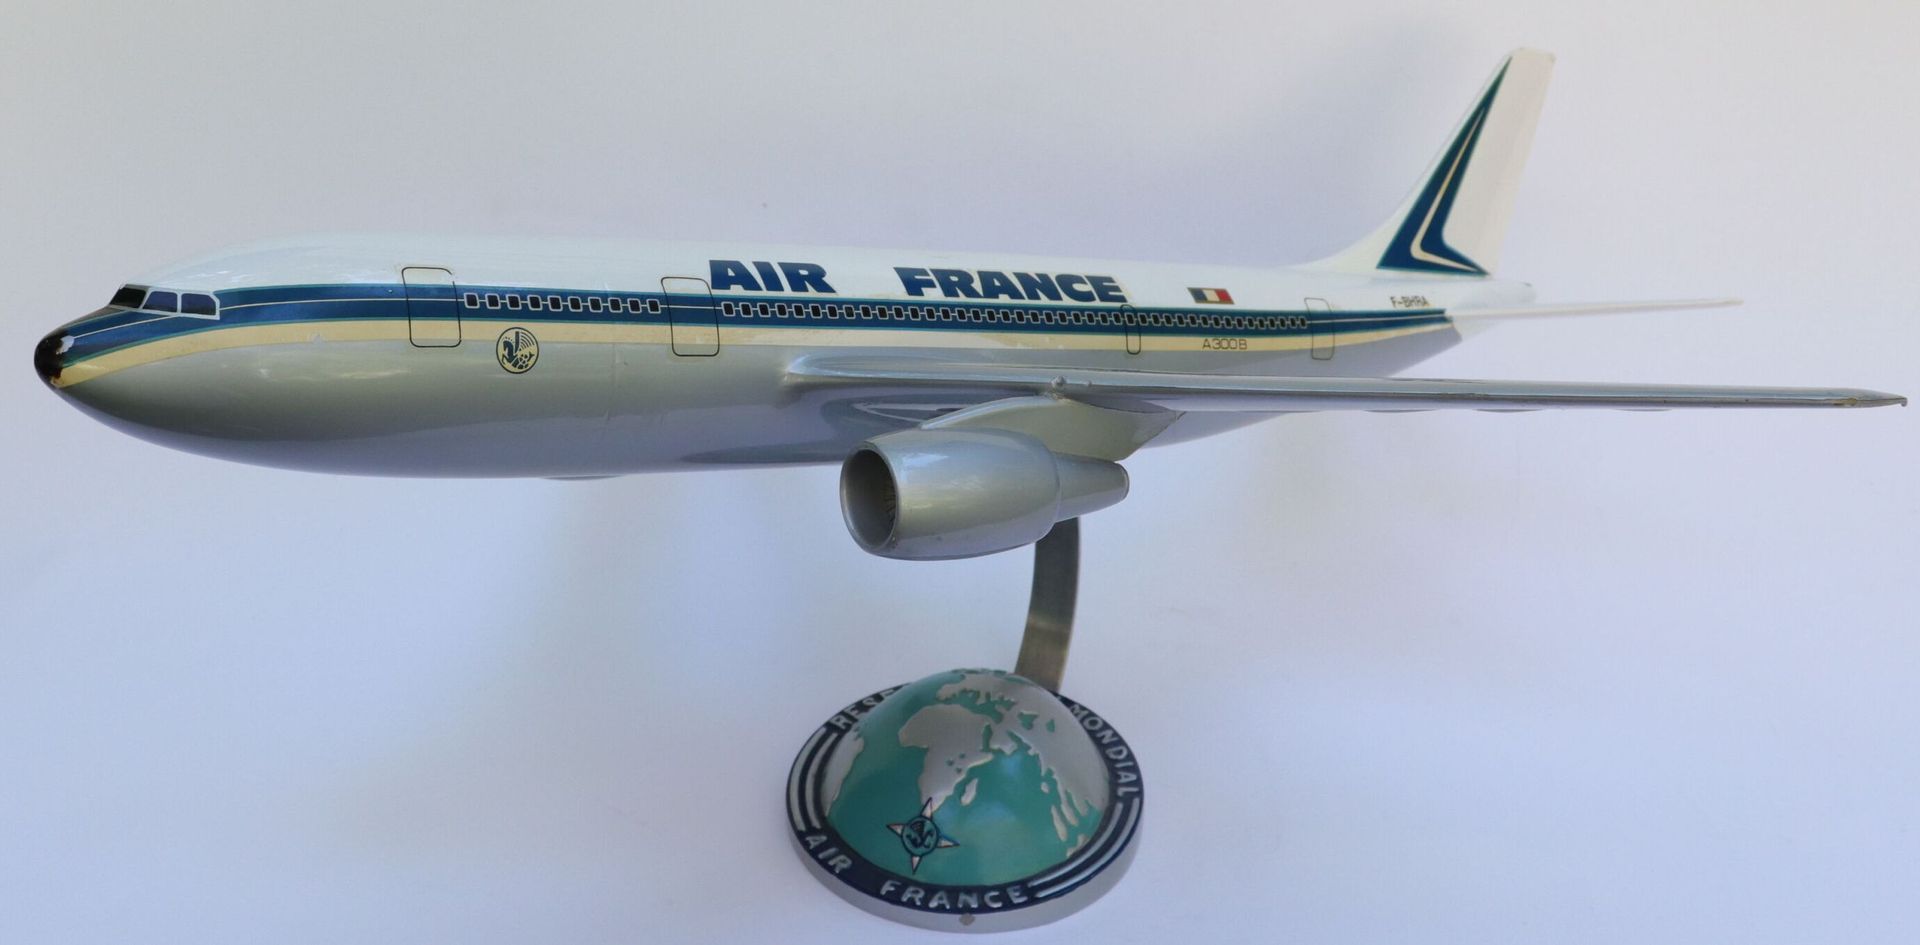 Null AIRBUS A300B AIR FRANCE.

Modelo antiguo de resina decorado con los antiguo&hellip;